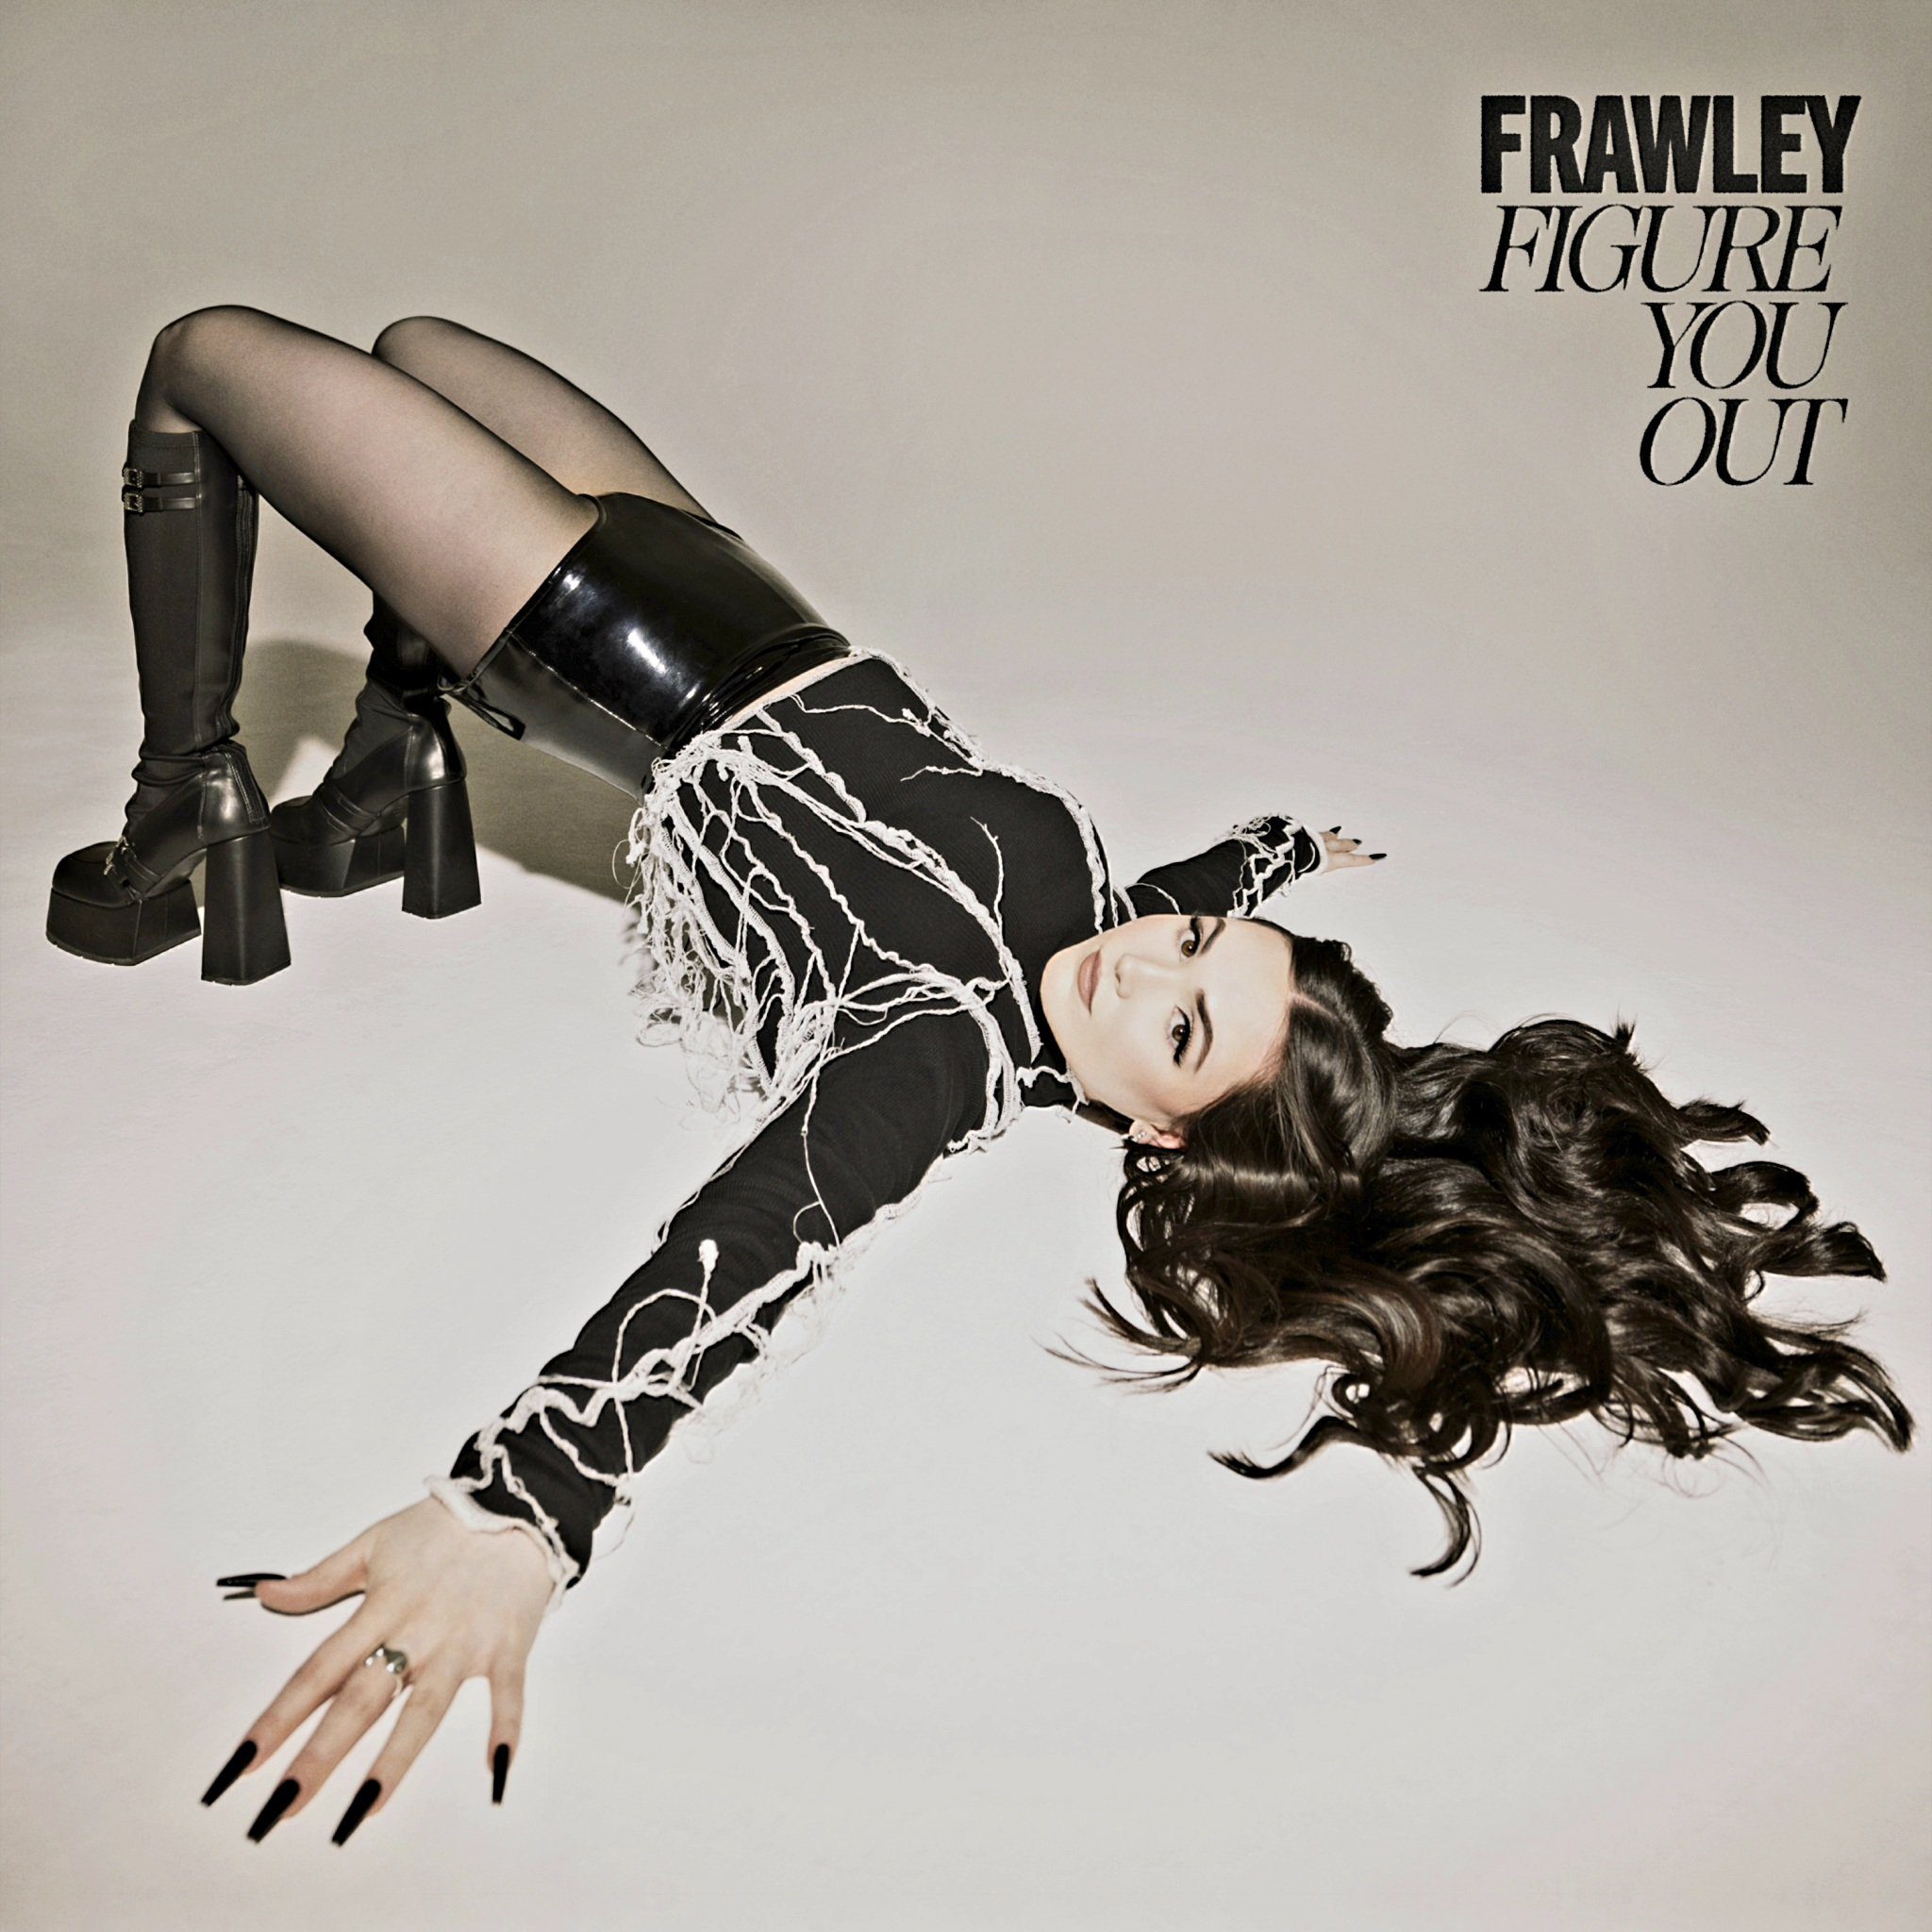 Frawley releases new music via 360 MAGAZINE.